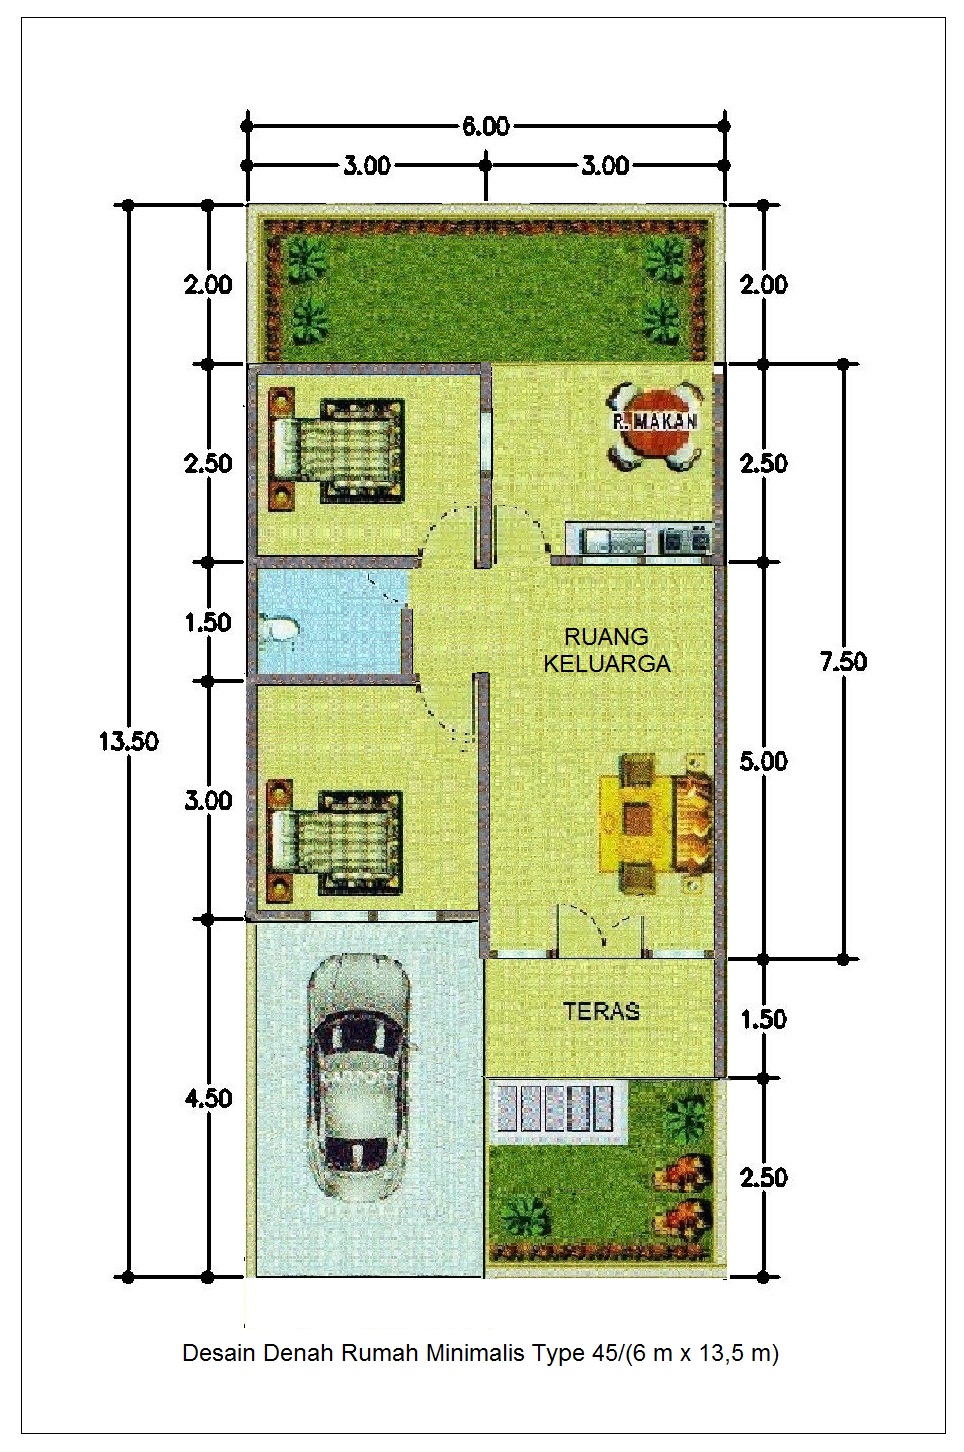 Http Arsyadpropertyblogspotcom 2013 07 Desain Denah Rumah Minimalis Type 45 6m X 135mhtml